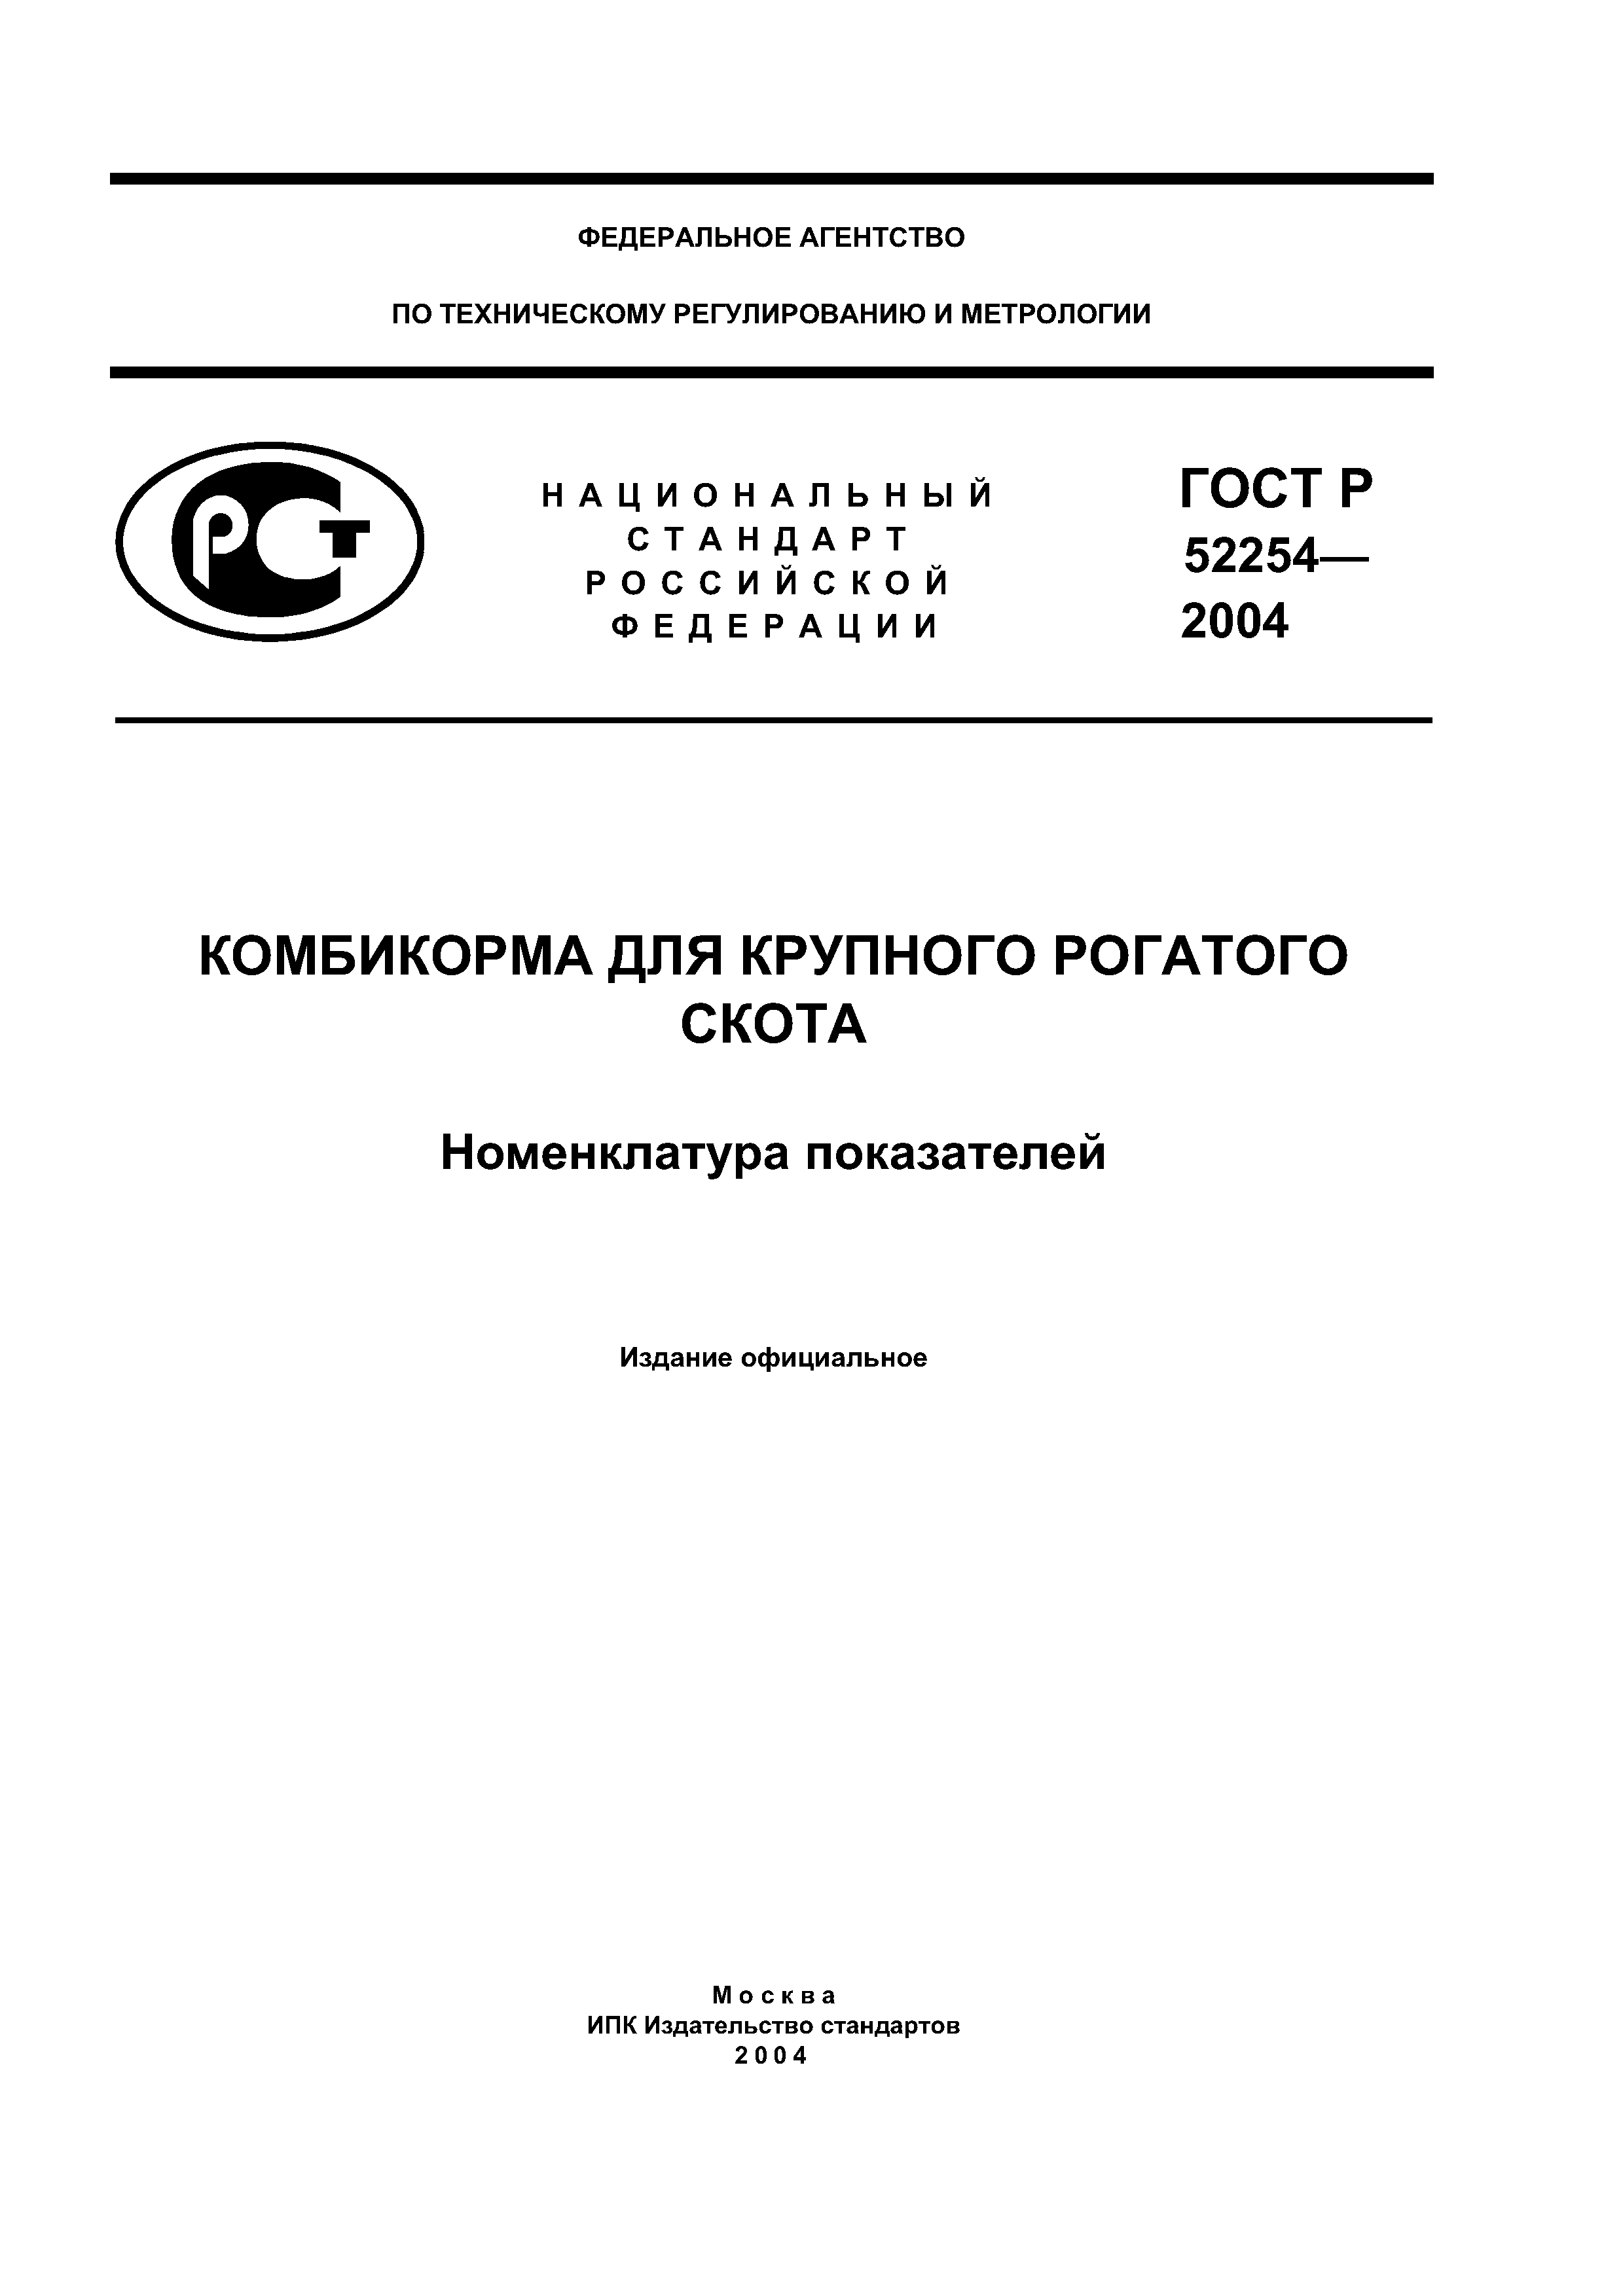 ГОСТ Р 52254-2004